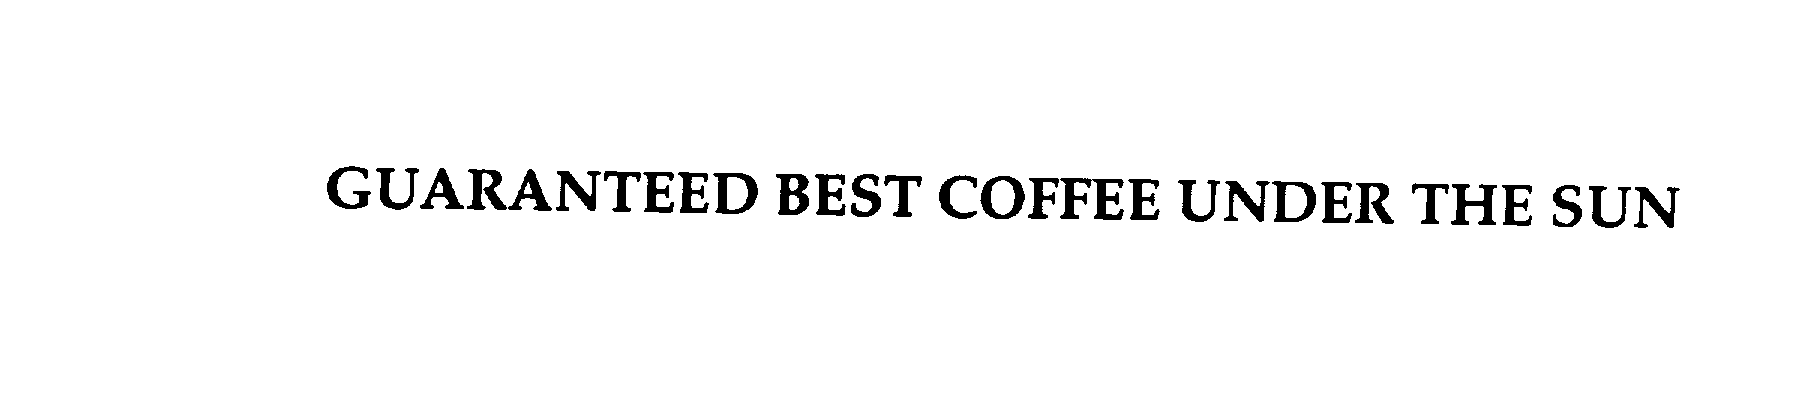  GUARANTEED BEST COFFEE UNDER THE SUN